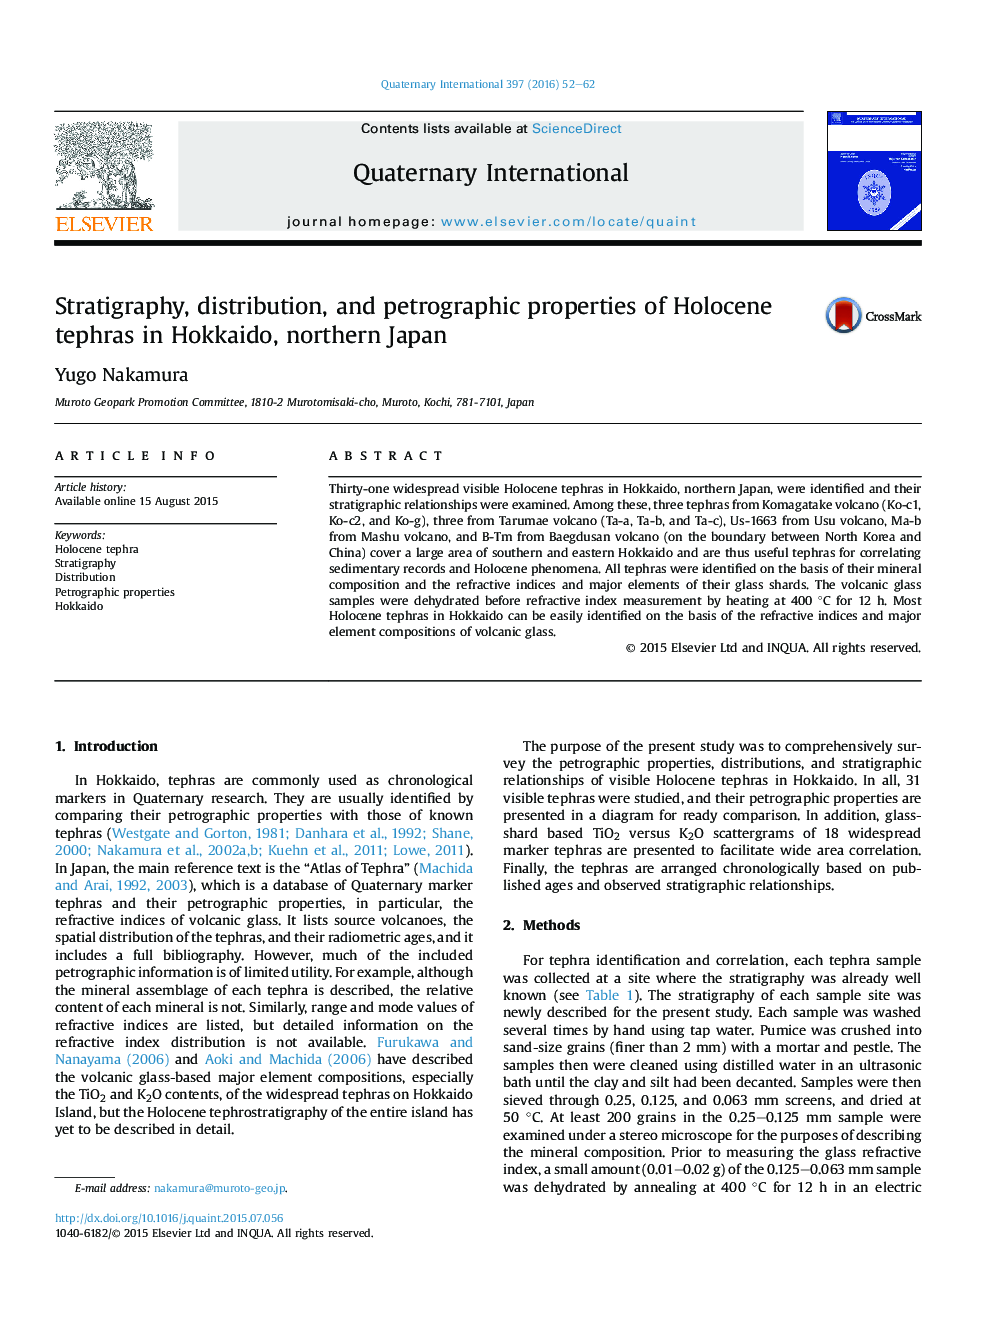 Stratigraphy, distribution, and petrographic properties of Holocene tephras in Hokkaido, northern Japan